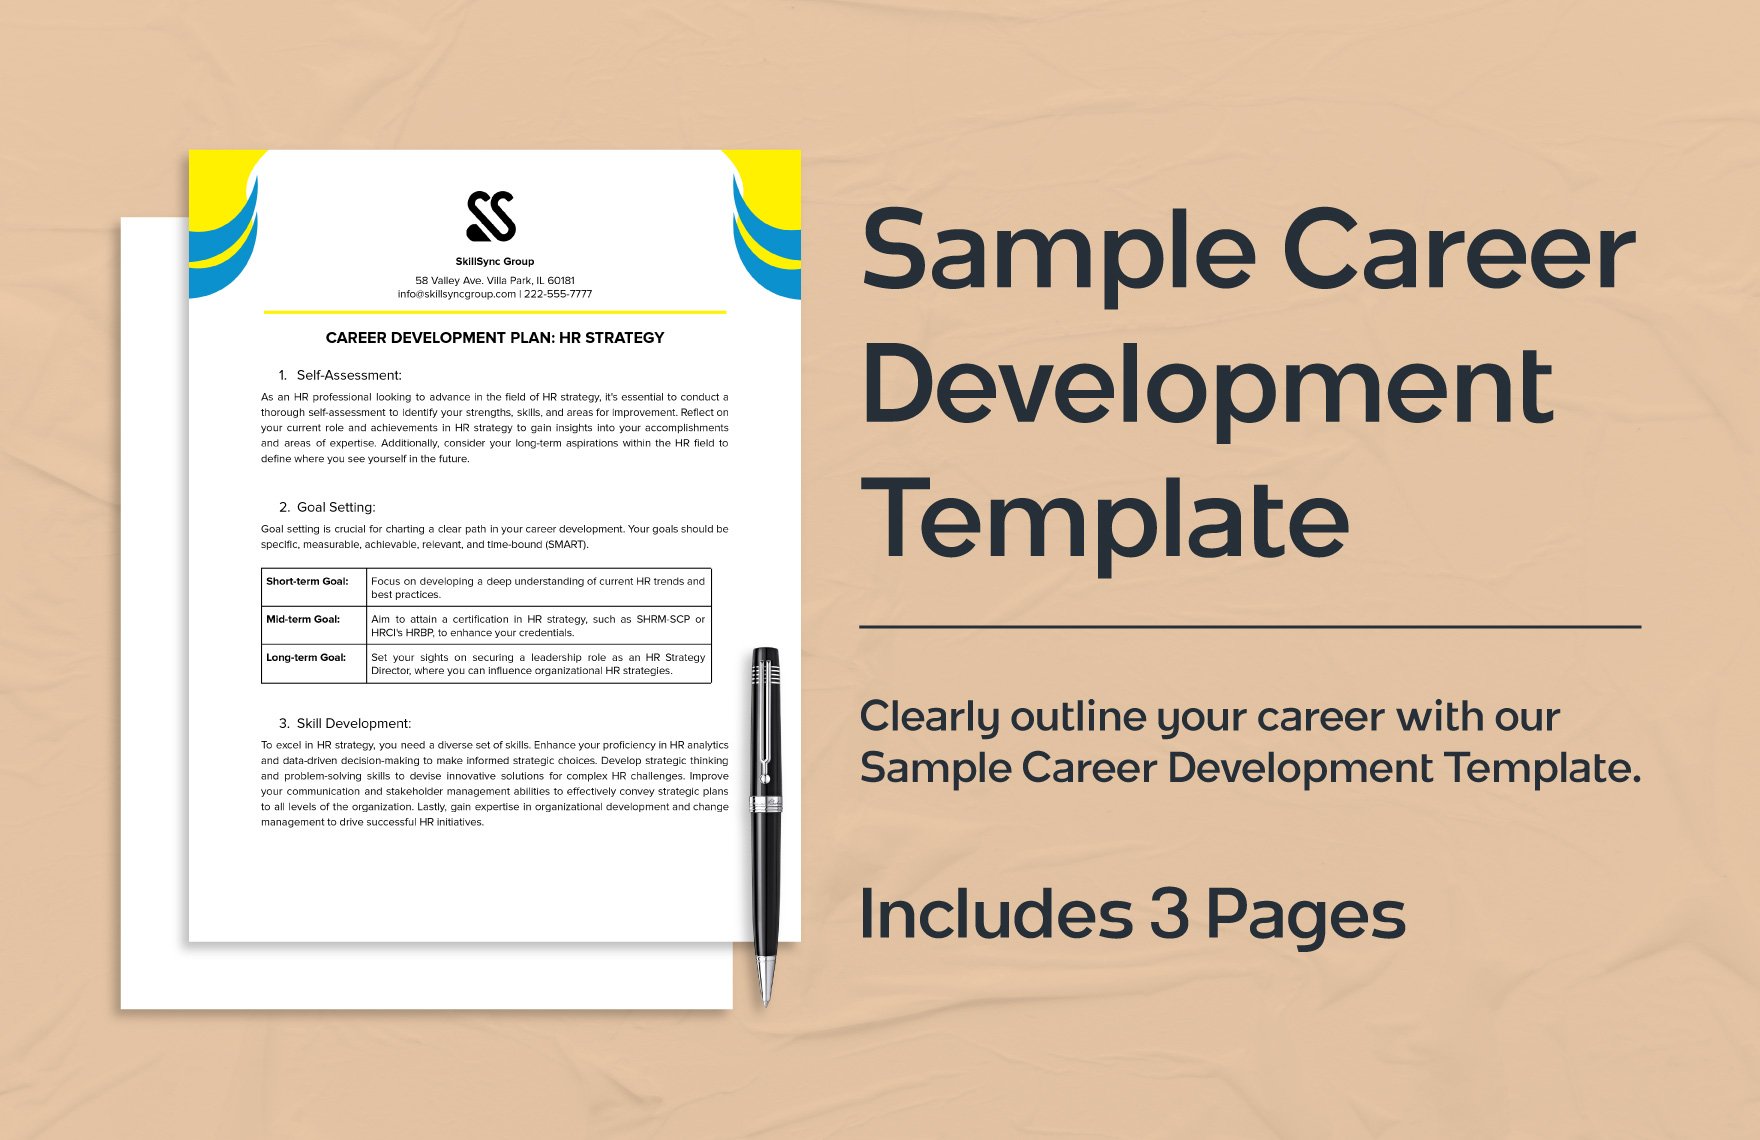 sample-career-development-template